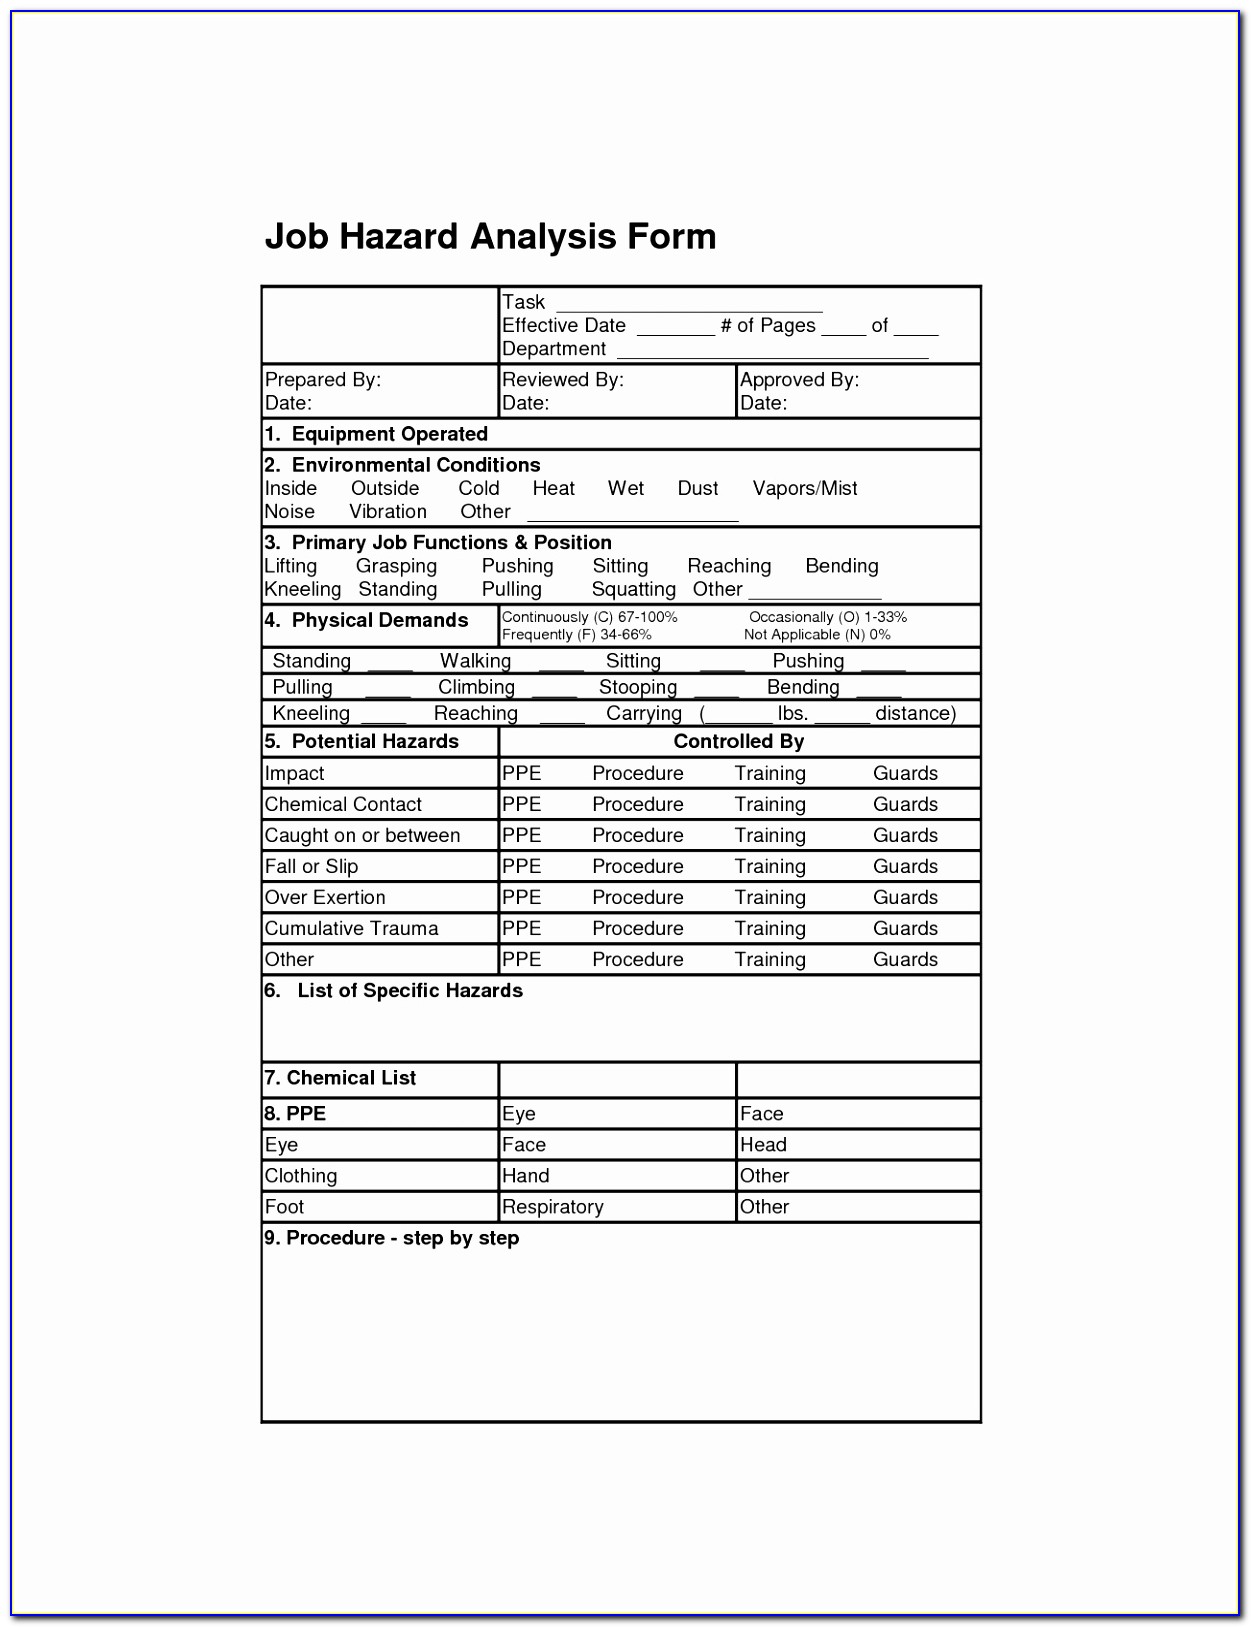 Job Hazard Analysis Form Excel